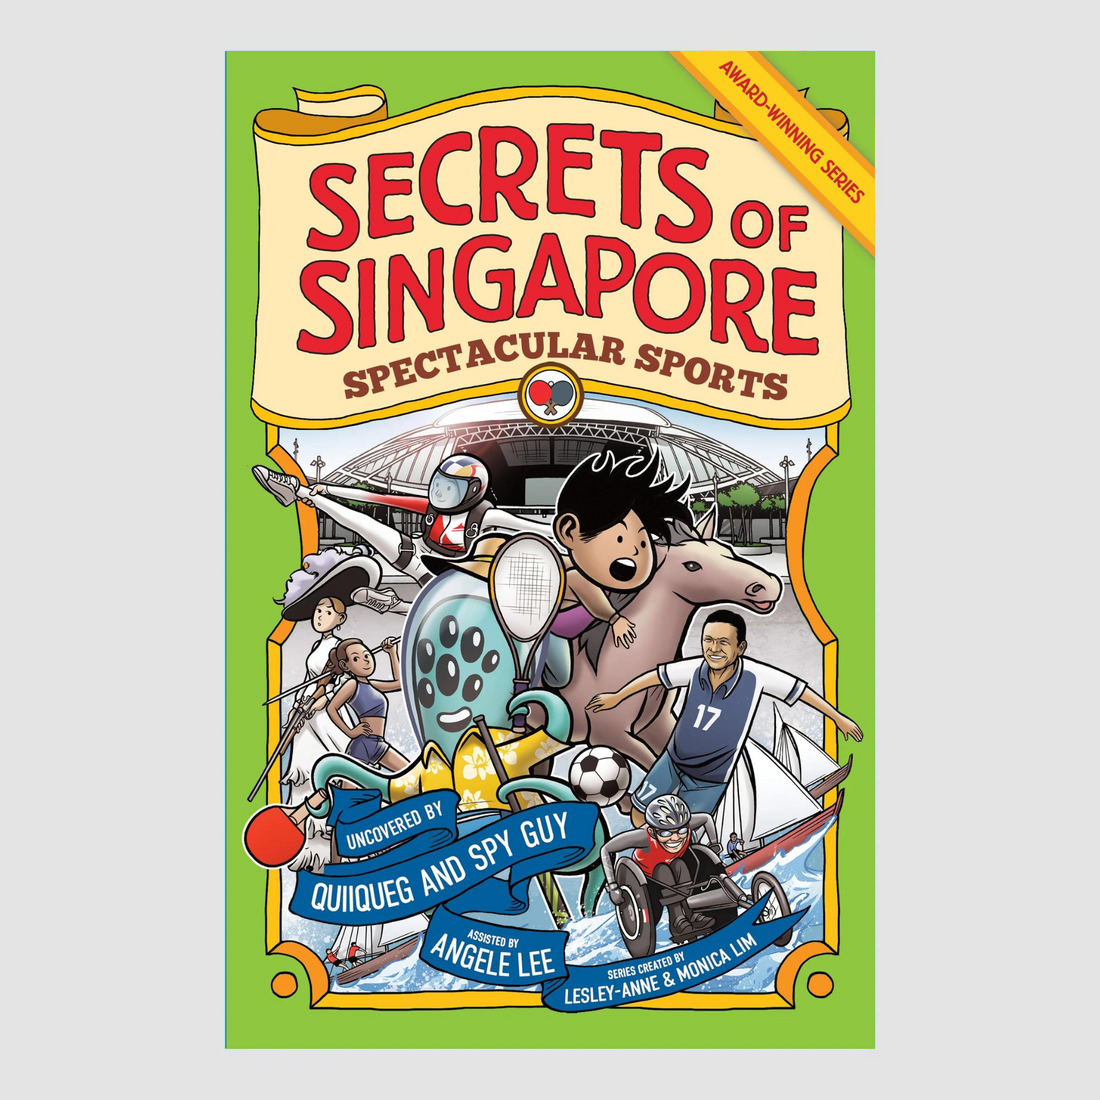 Secrets of Singapore: Spectacular Sports